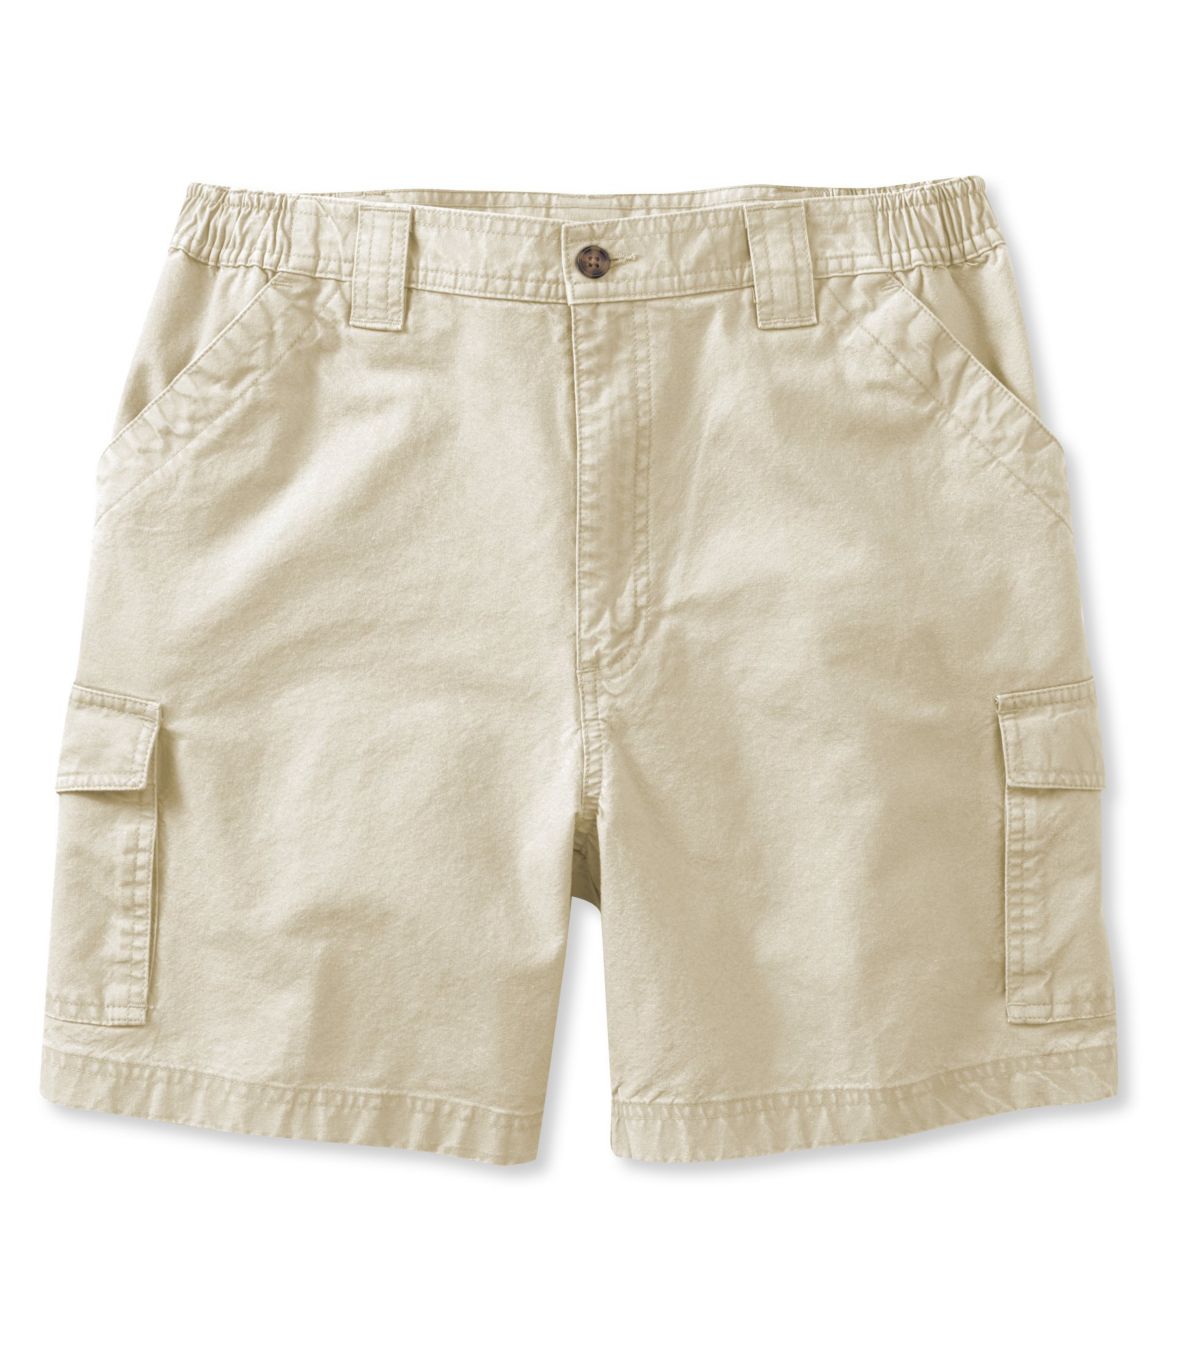 Men's Tropic-Weight Cargo Shorts, Comfort Waist, 6"